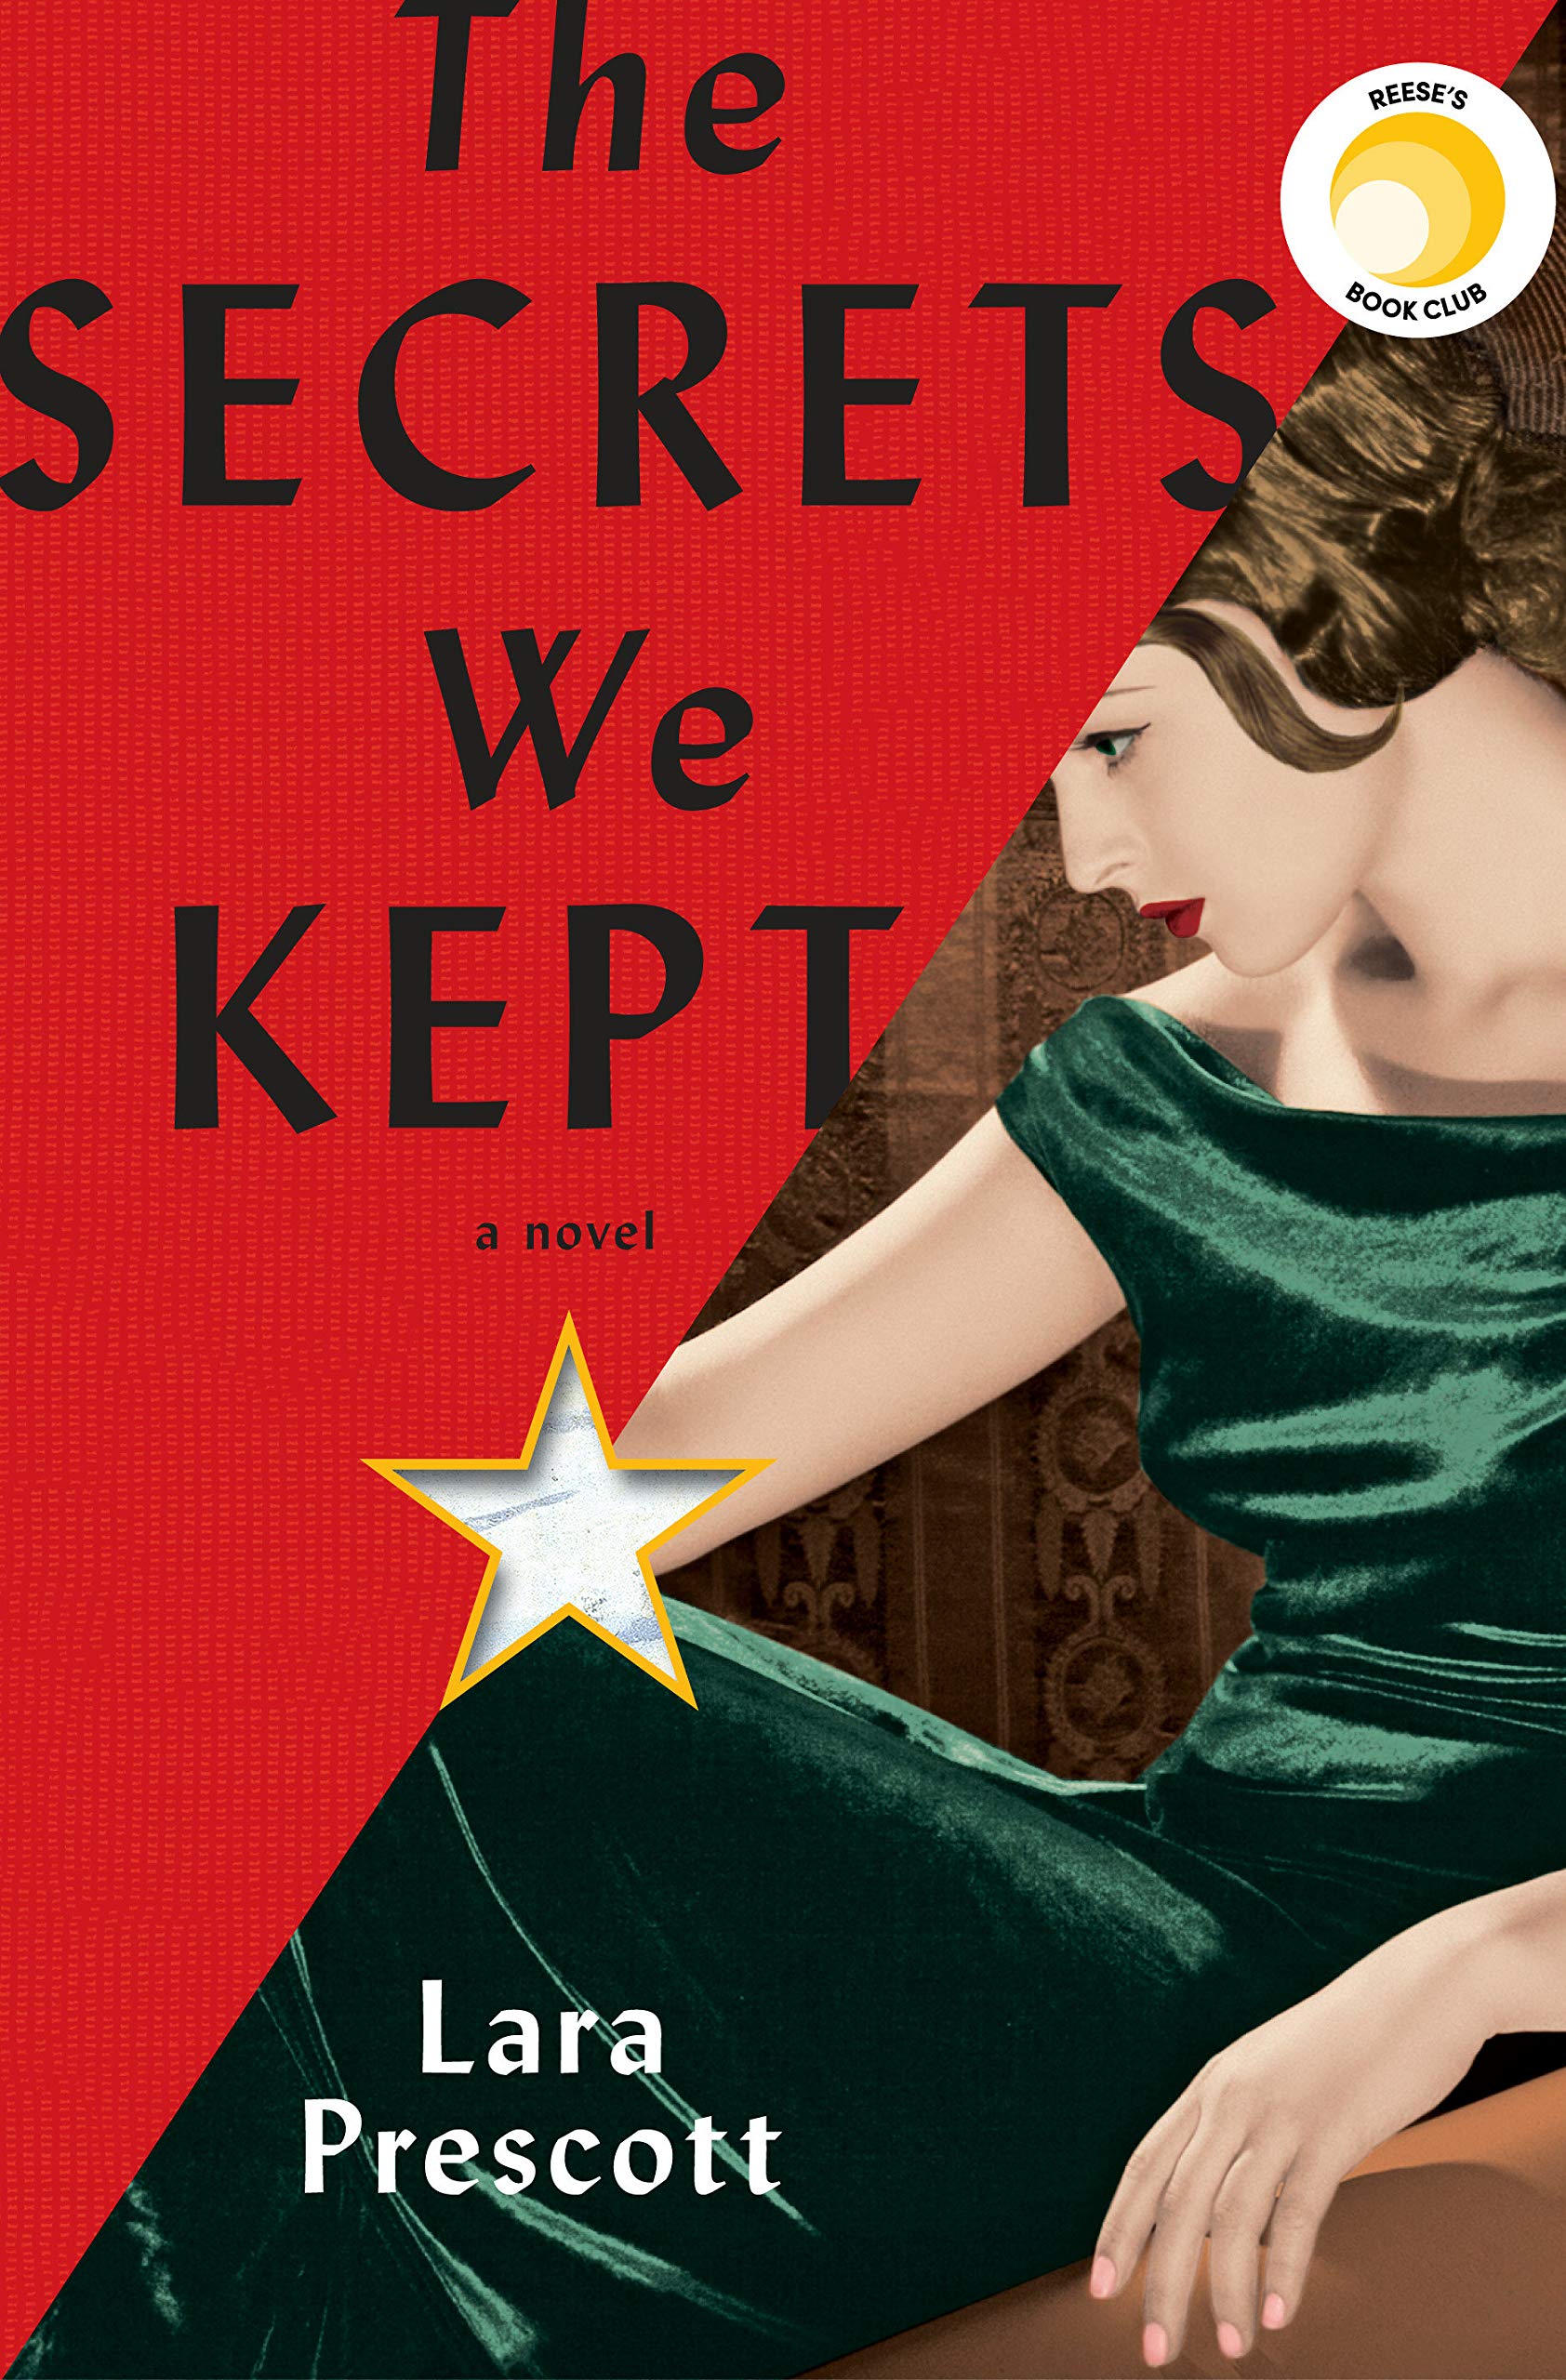 Book cover of "The Secrets We Kept," by Lara Prescott